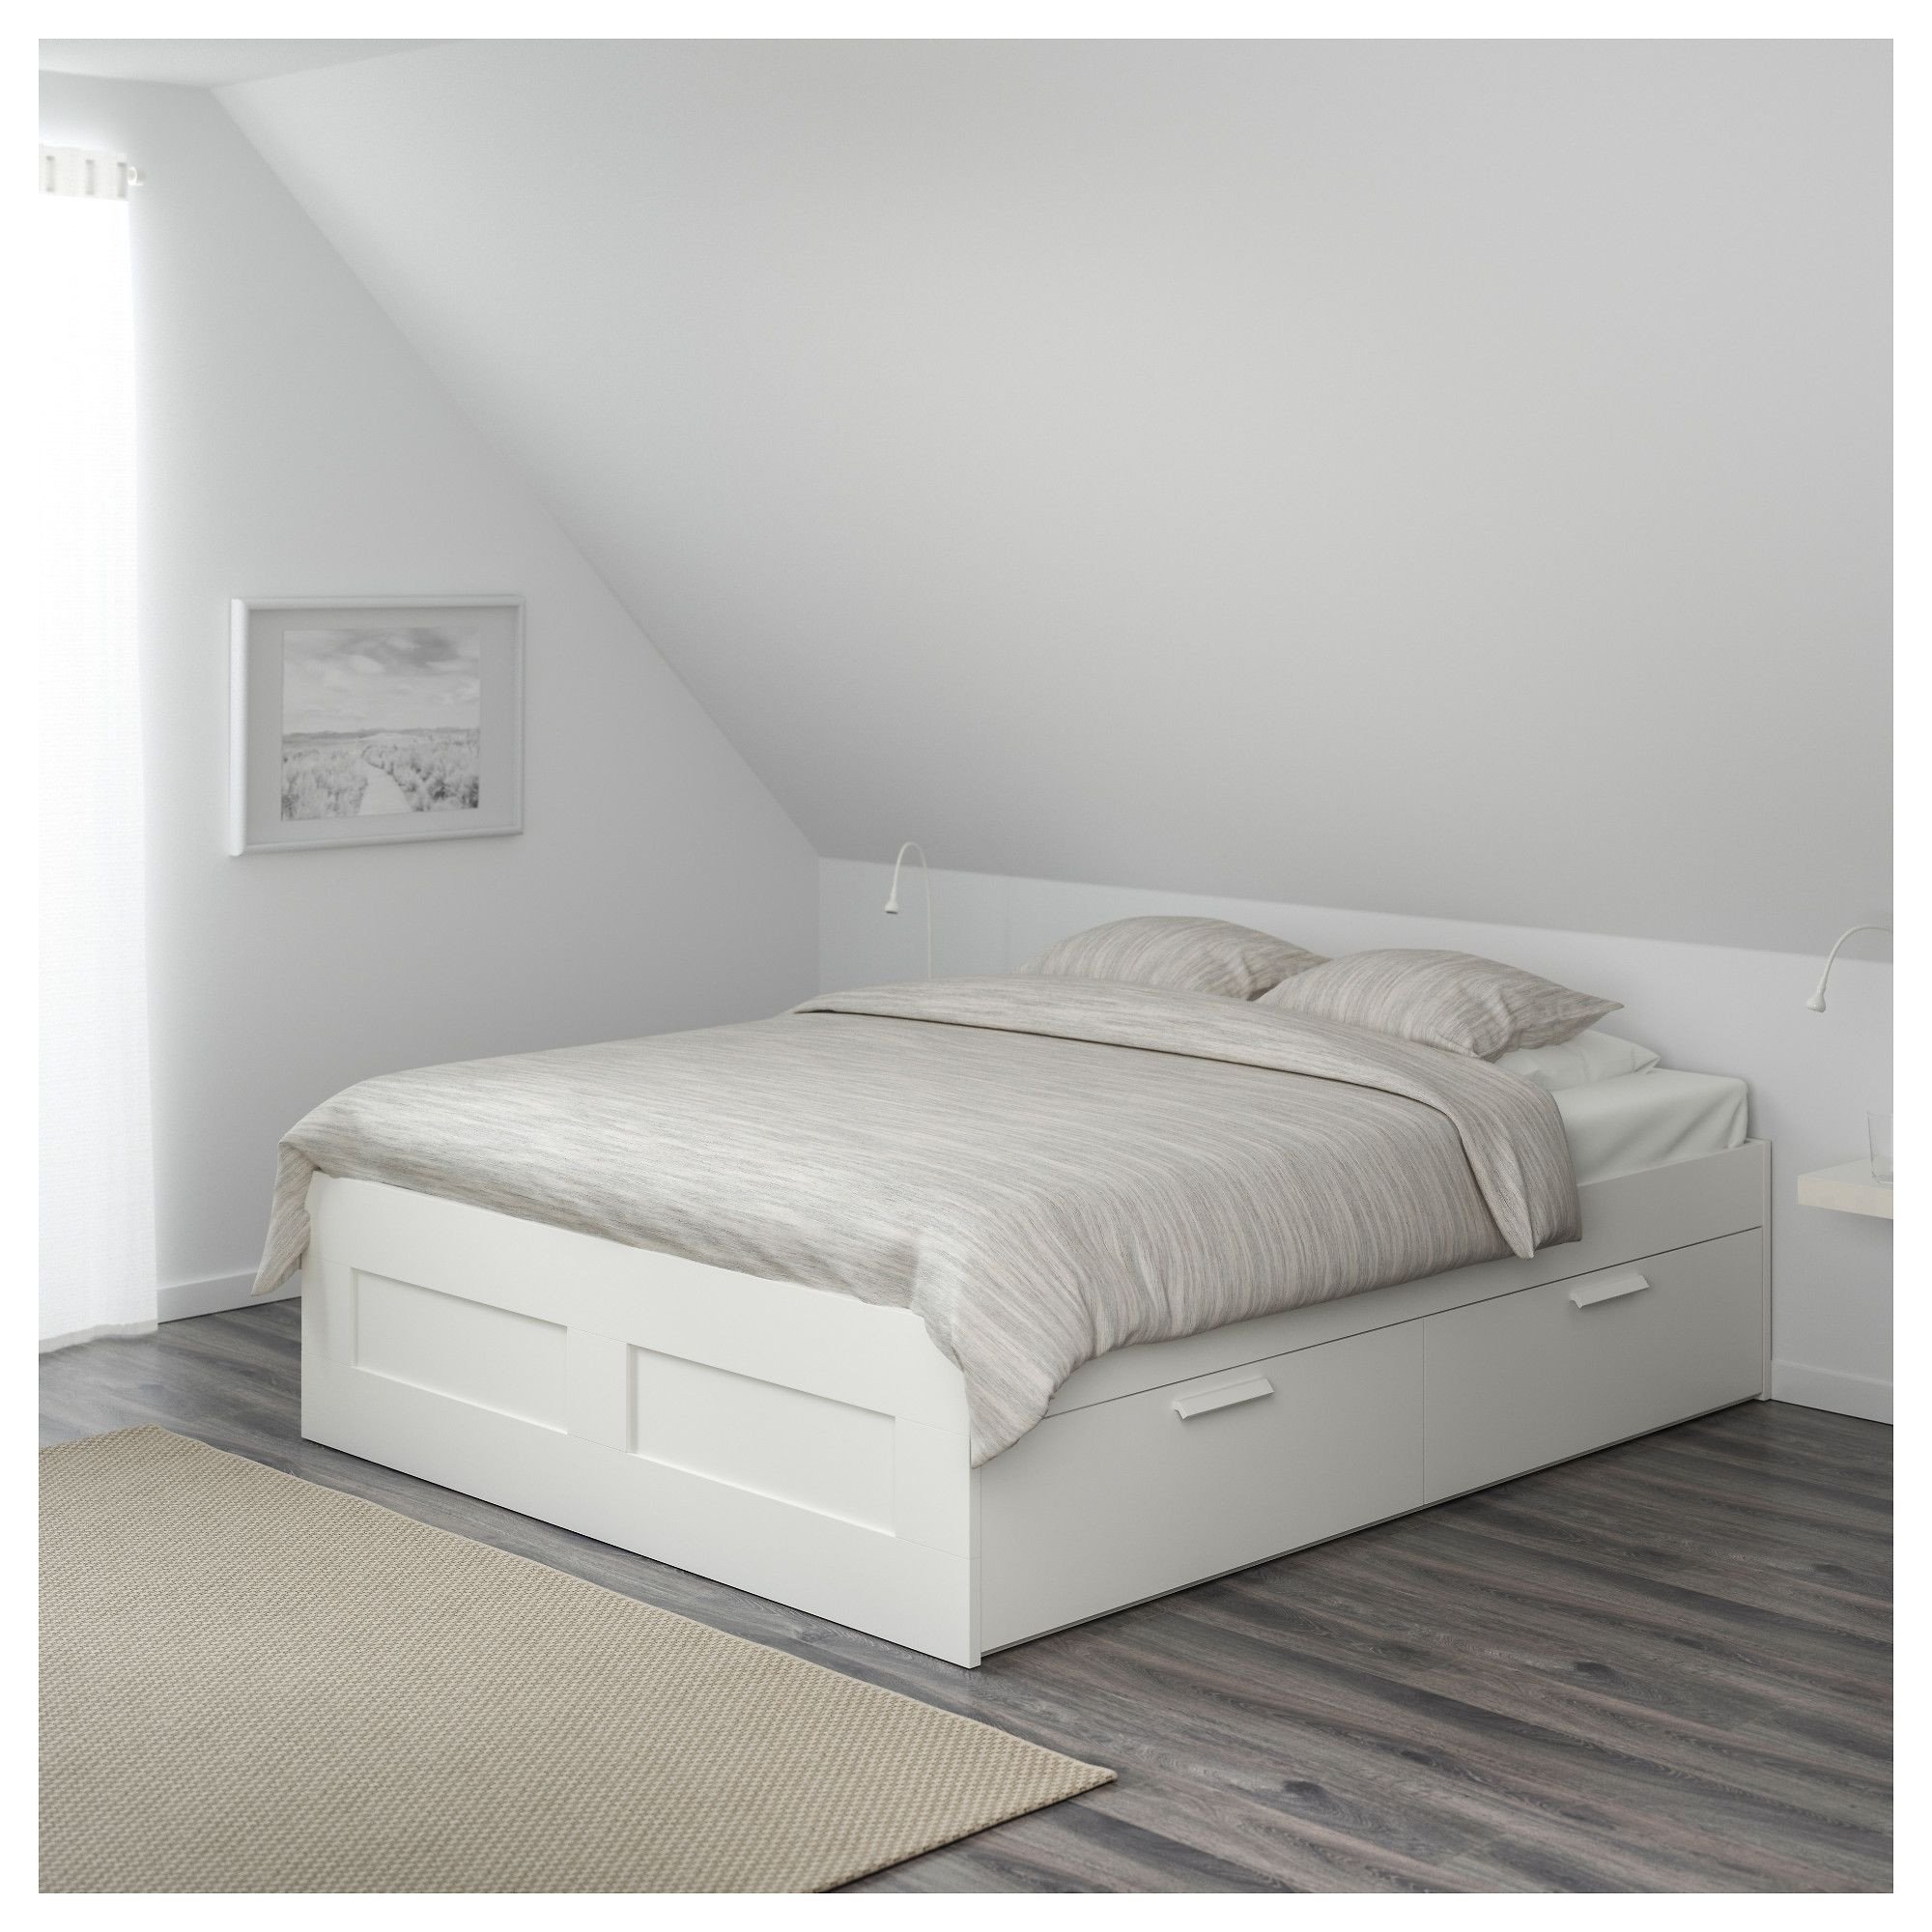 Twin Bedroom Set Ikea Fresh Ikea Brimnes Bed Frame with Storage White